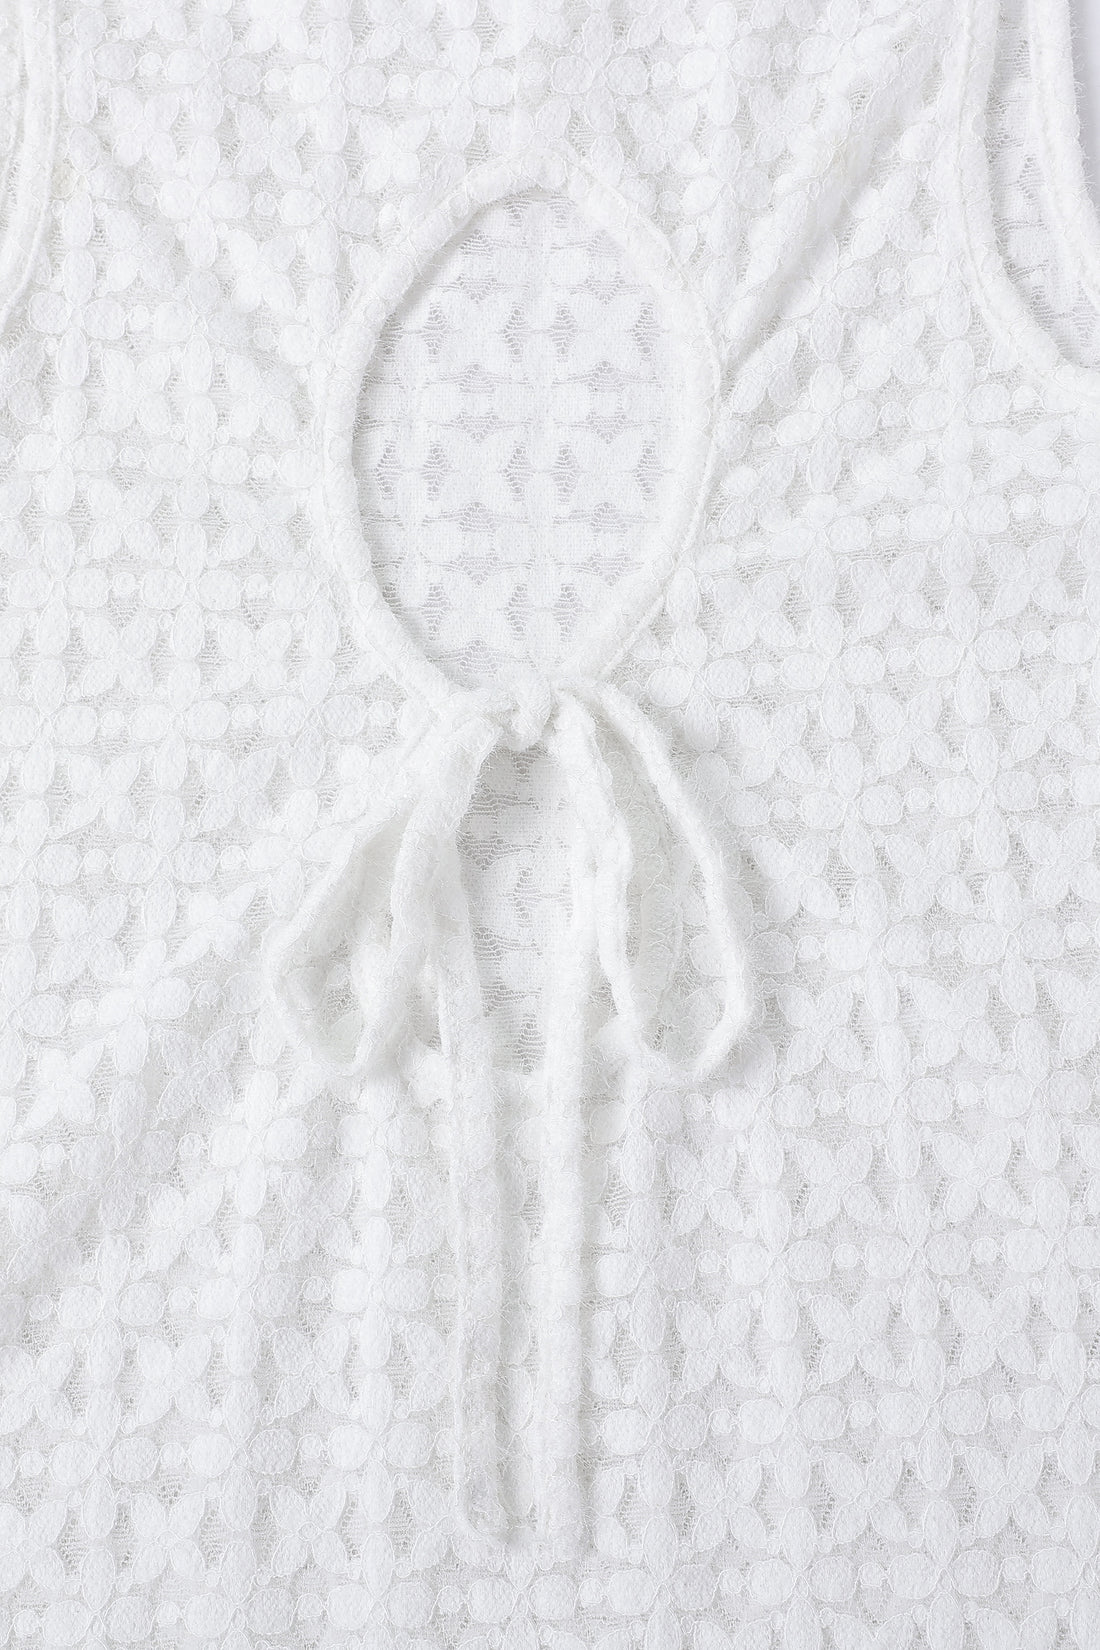 Hole-y White Lace Midi Dress